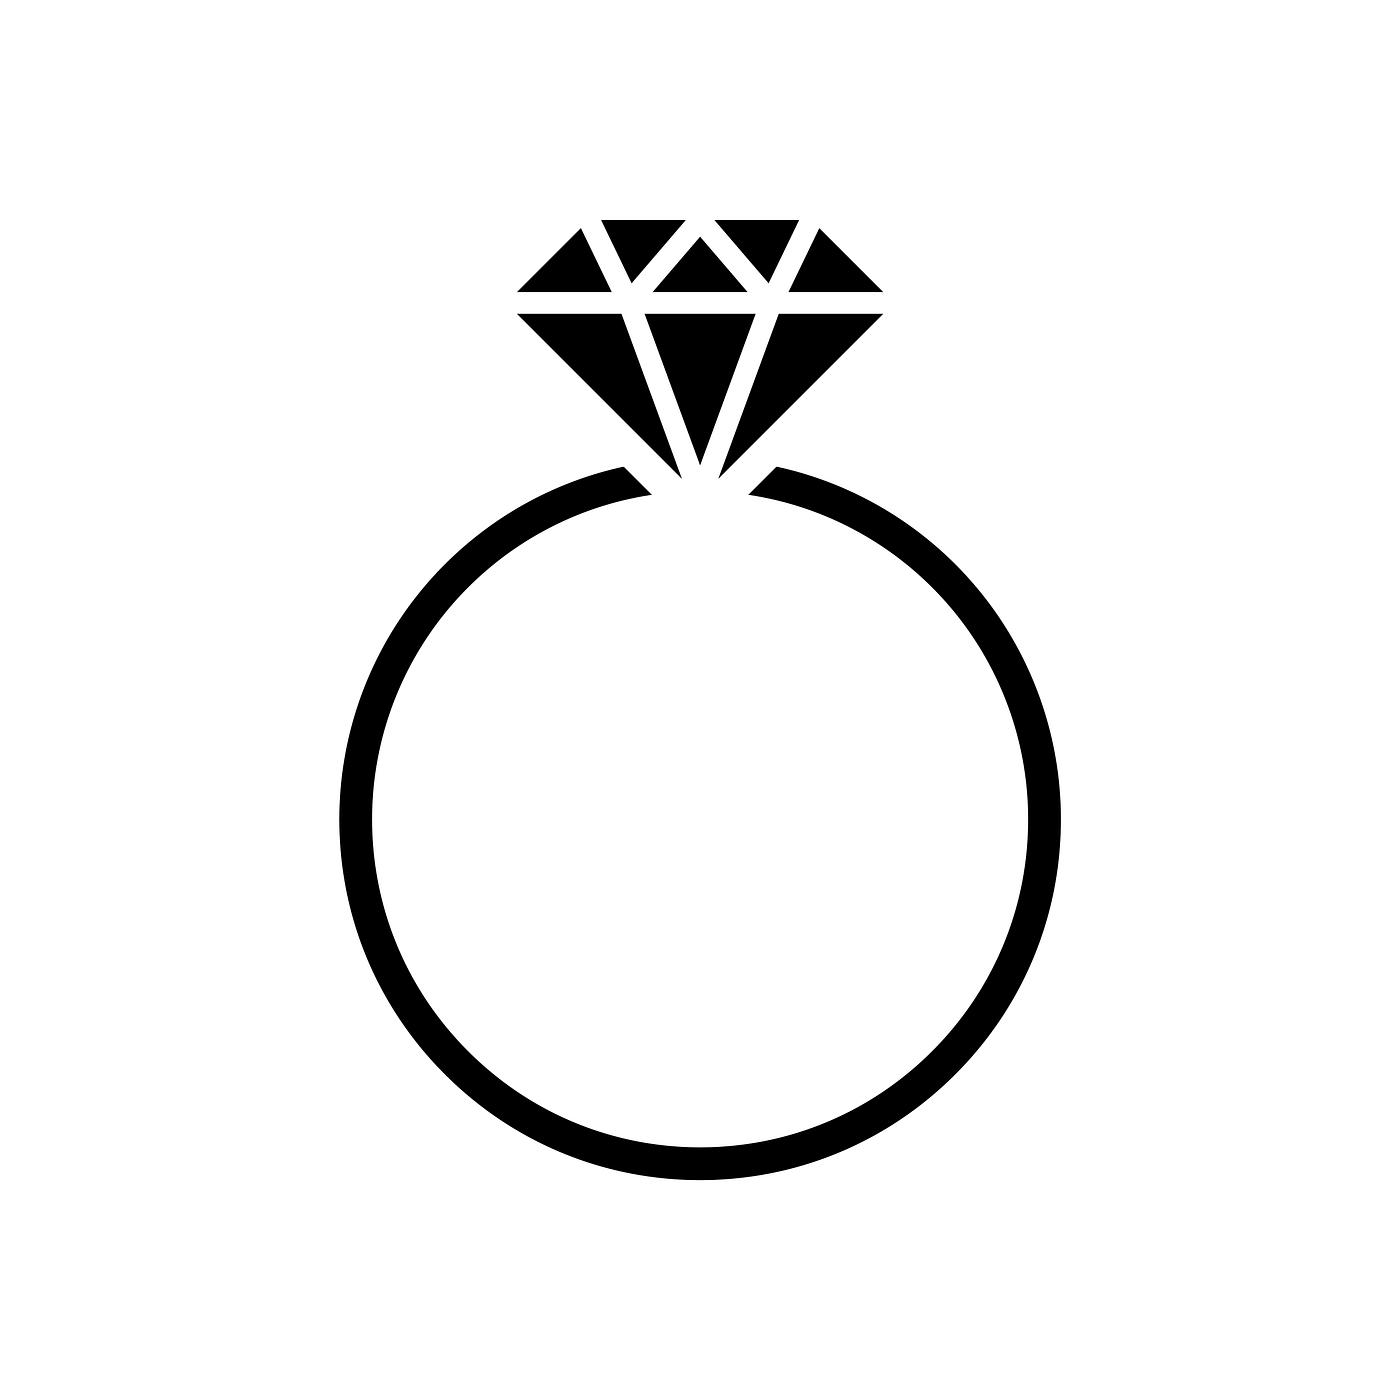 Diamond wedding ring graphic illustration Free vector